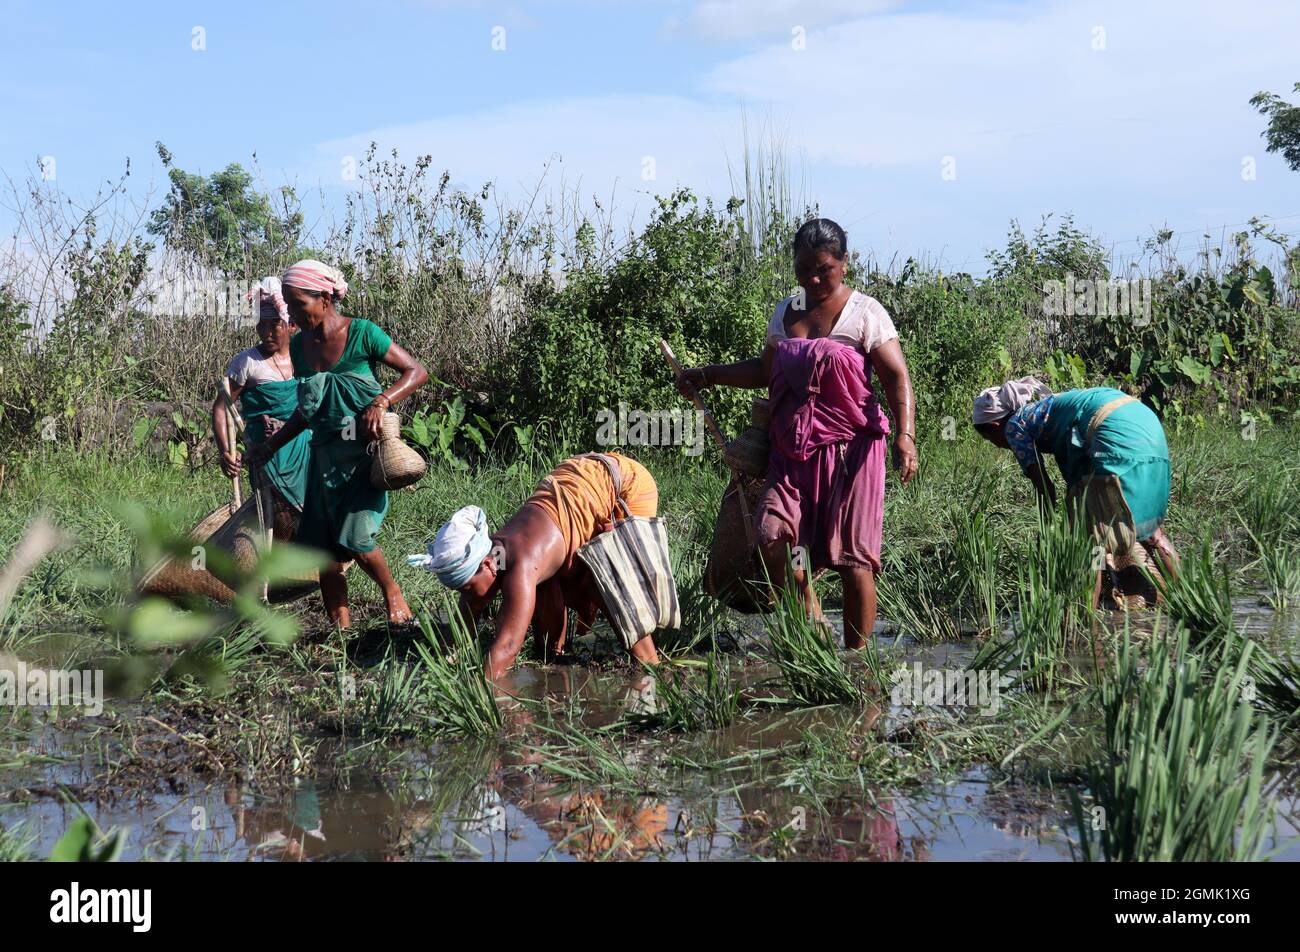 https://c8.alamy.com/comp/2GMK1XG/bodo-community-women-searching-fish-in-a-mud-water-field-using-traditional-fishing-equipment-jakoi-at-a-village-on-september-15-2021-in-baksa-india-2GMK1XG.jpg